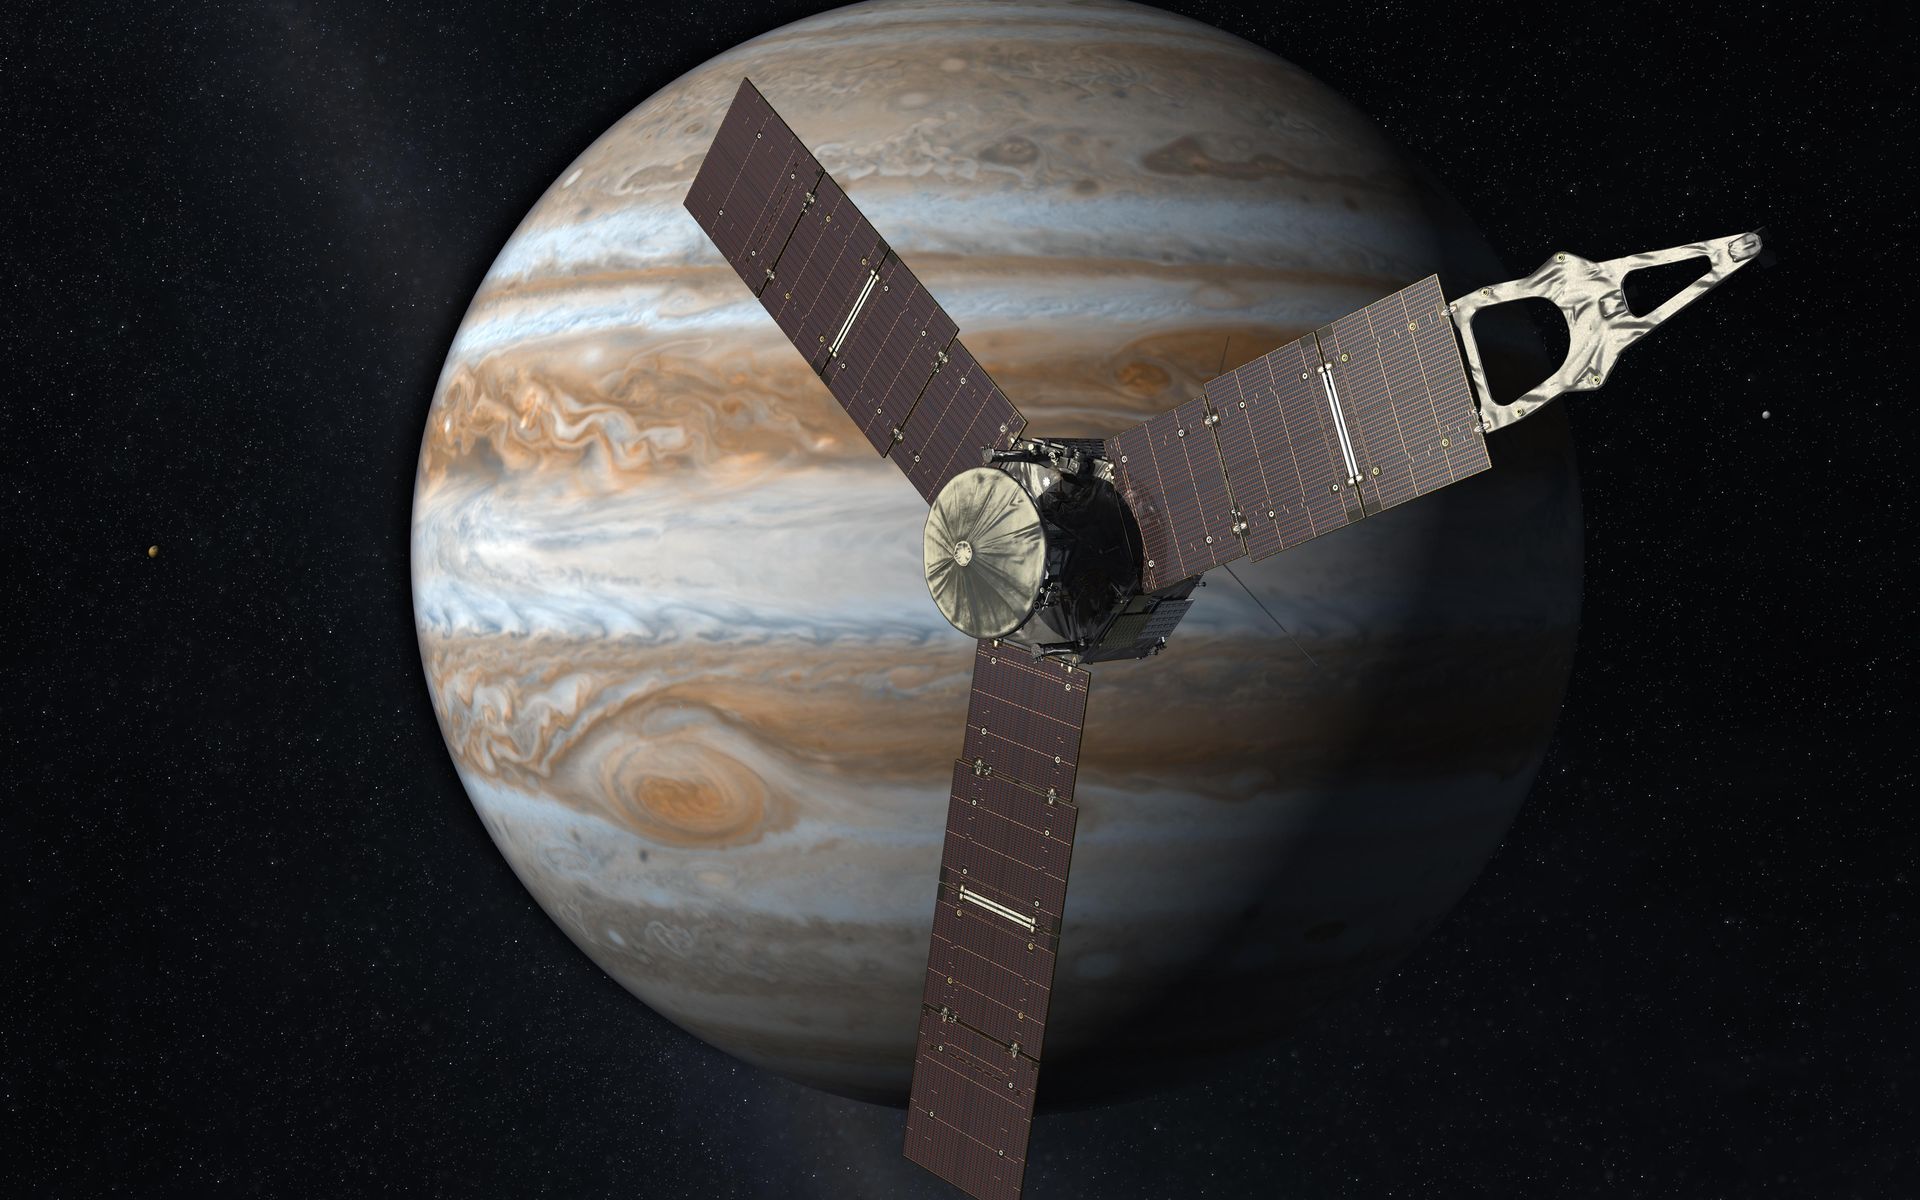 Artist depiction of Juno spacecraft in orbit about the planet Jupiter